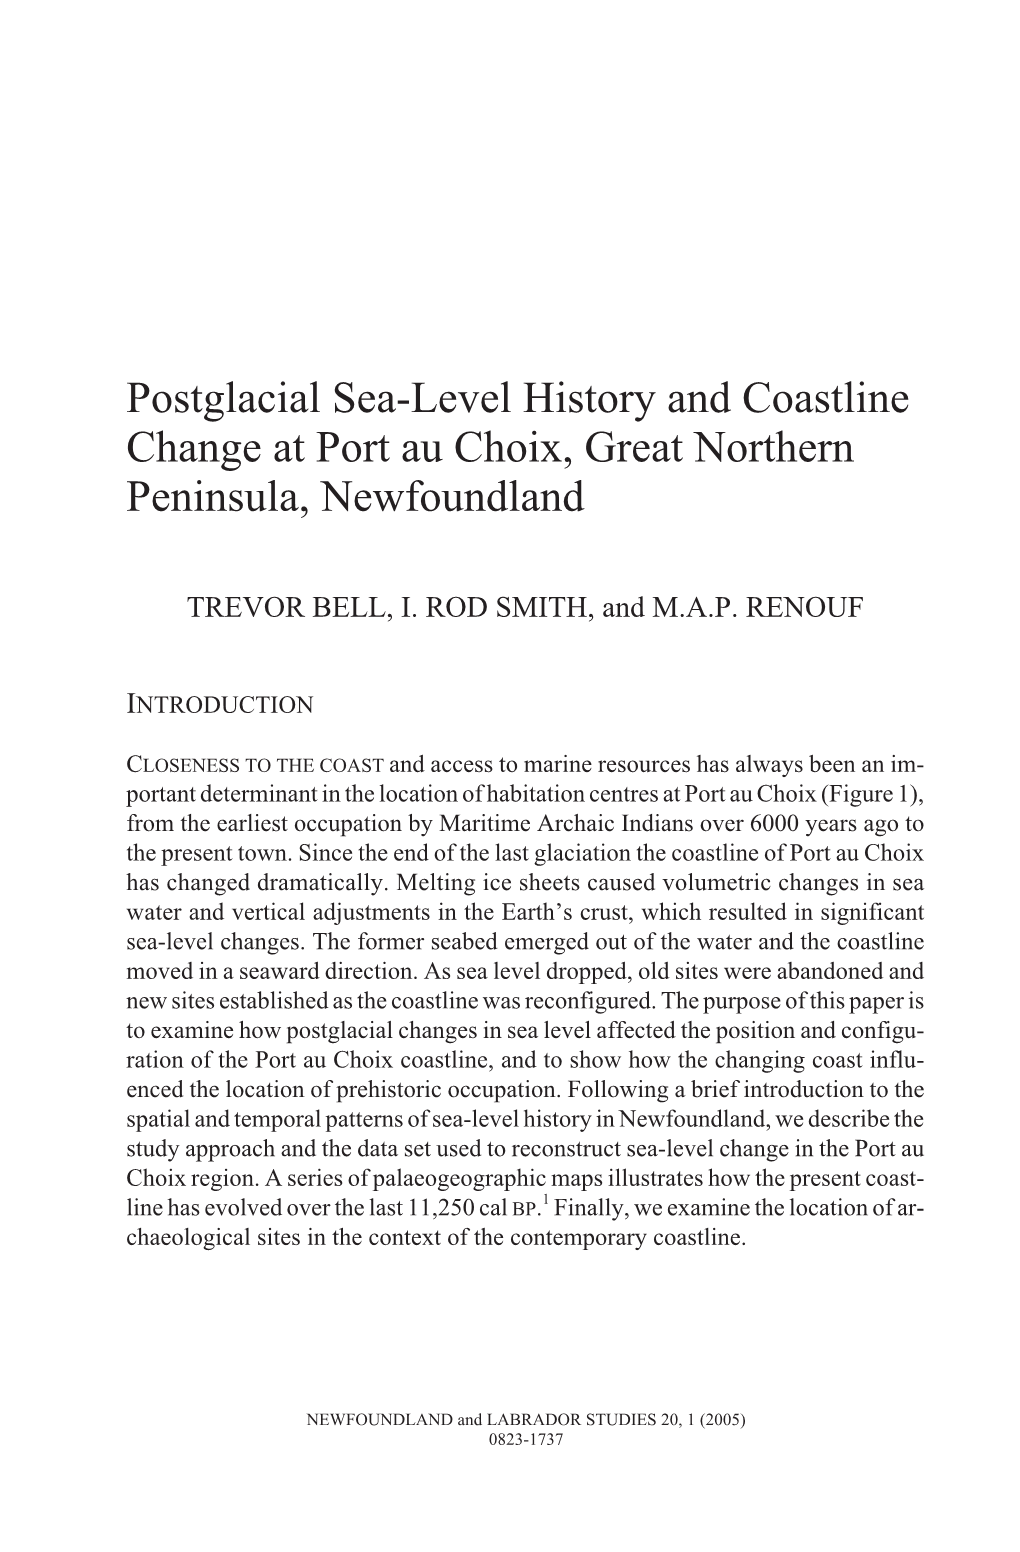 Postglacial Sea-Level History and Coastline Change at Port Au Choix, Great Northern Peninsula, Newfoundland